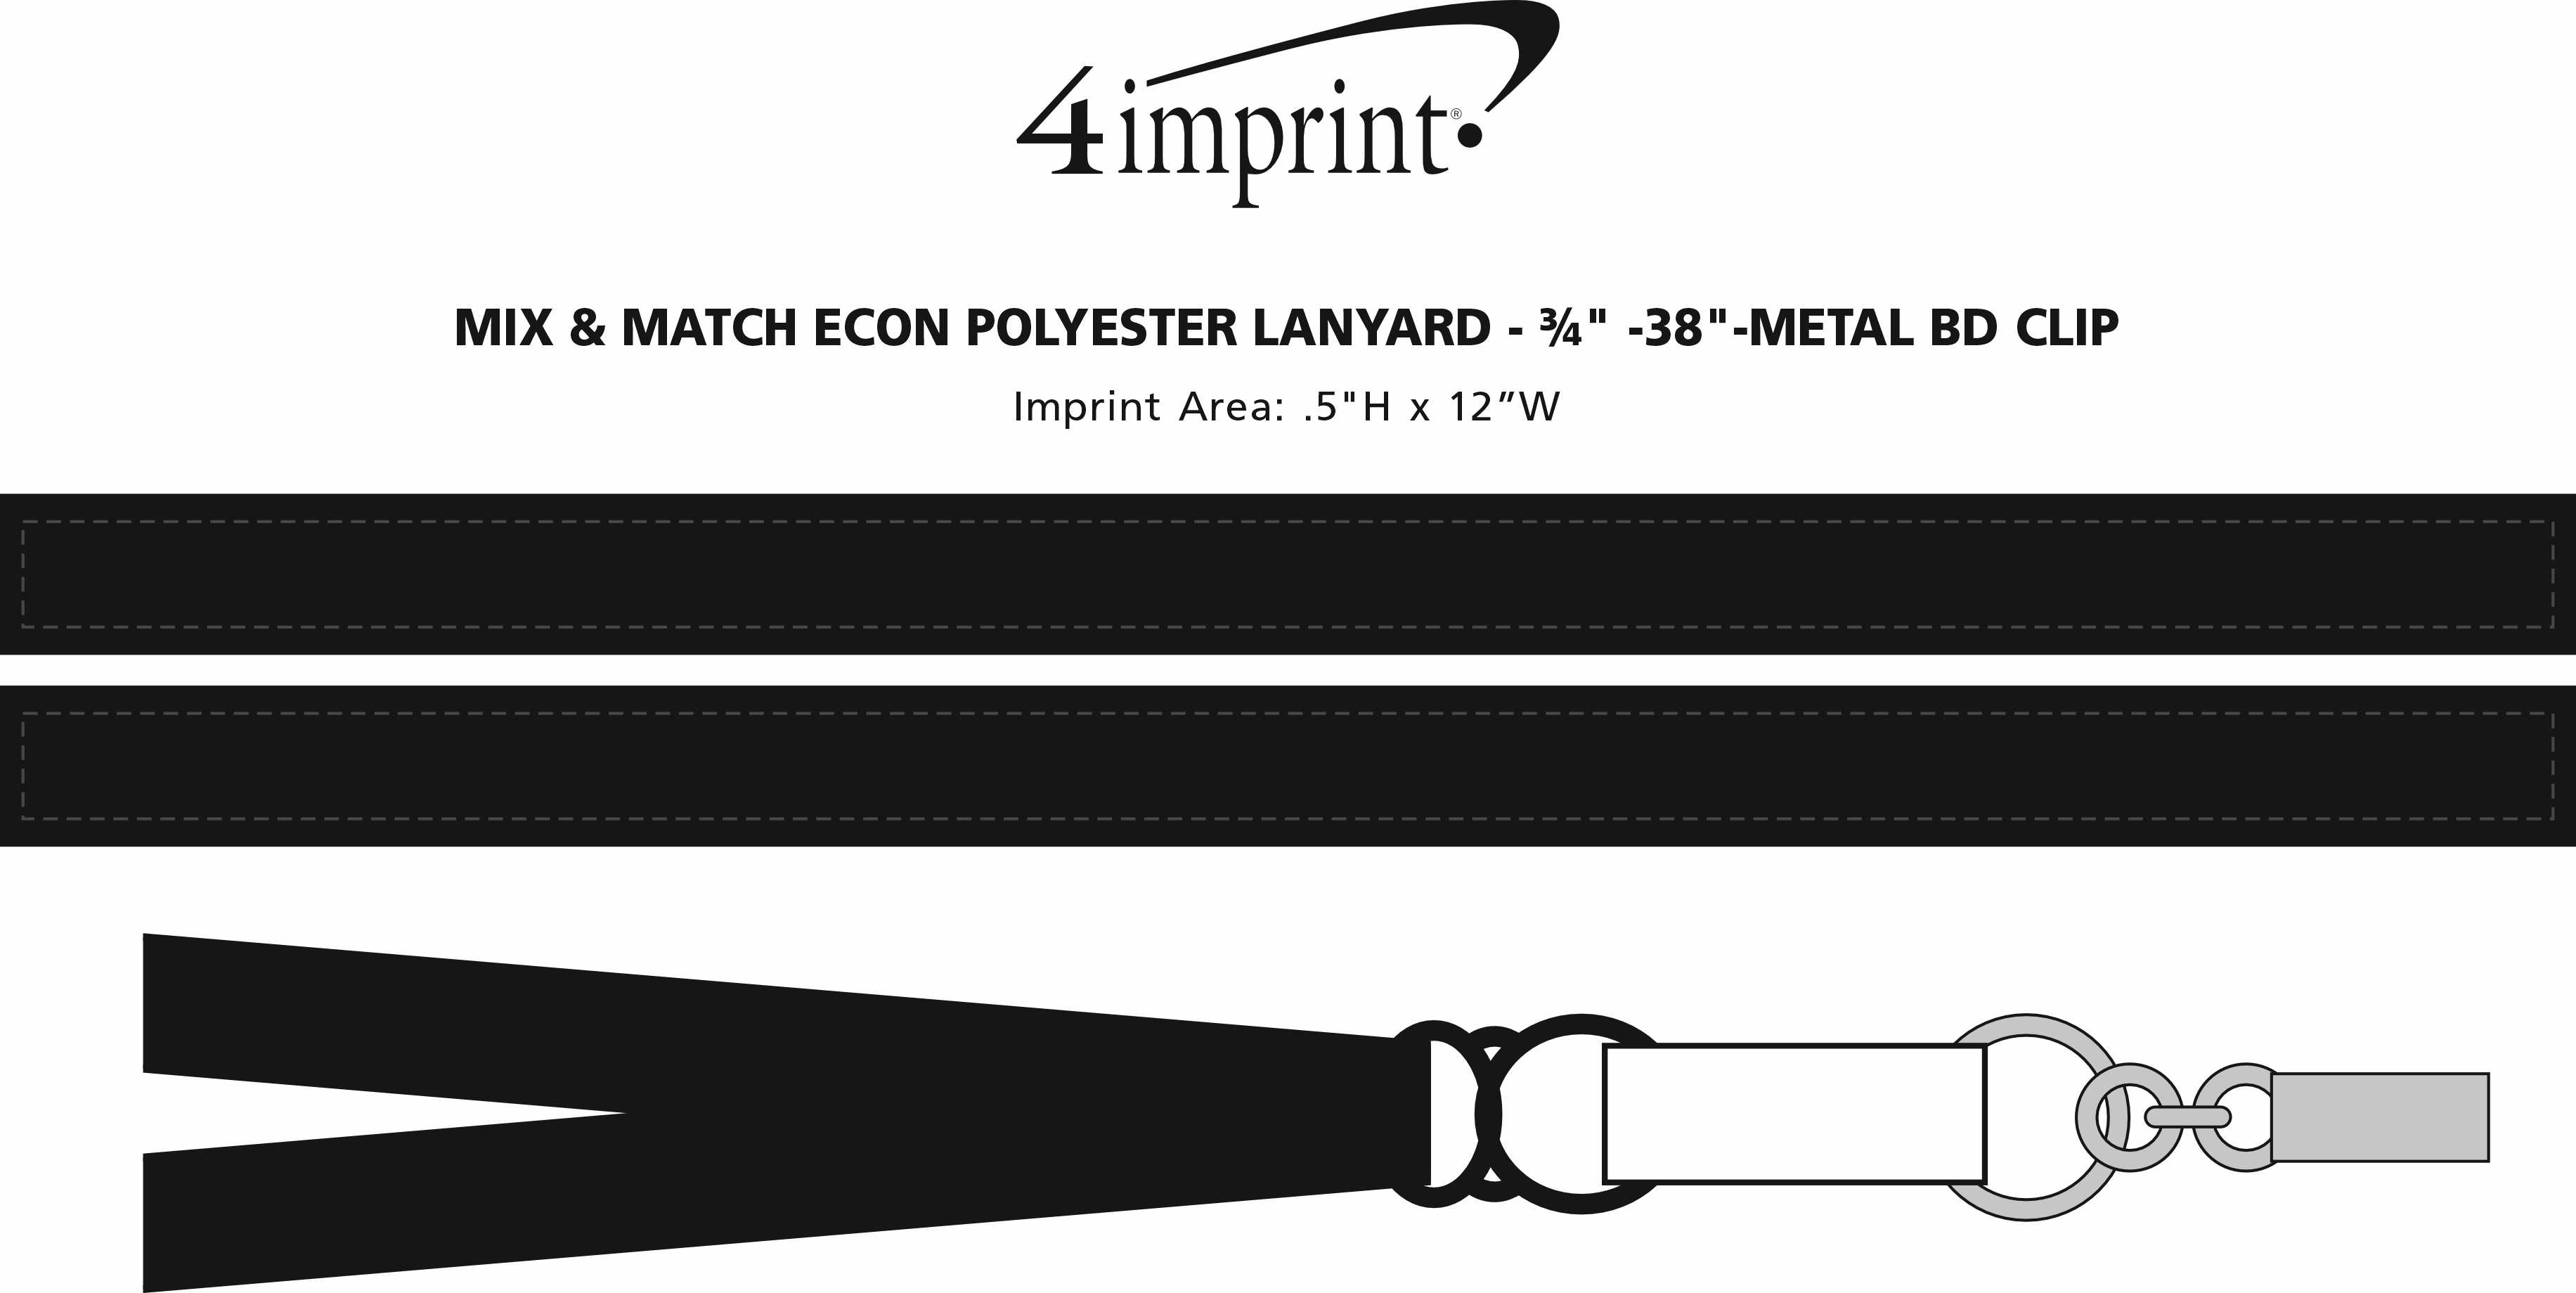 Imprint Area of Mix and Match Econ Polyester Lanyard - 3/4" - 38" - Metal Bulldog Clip